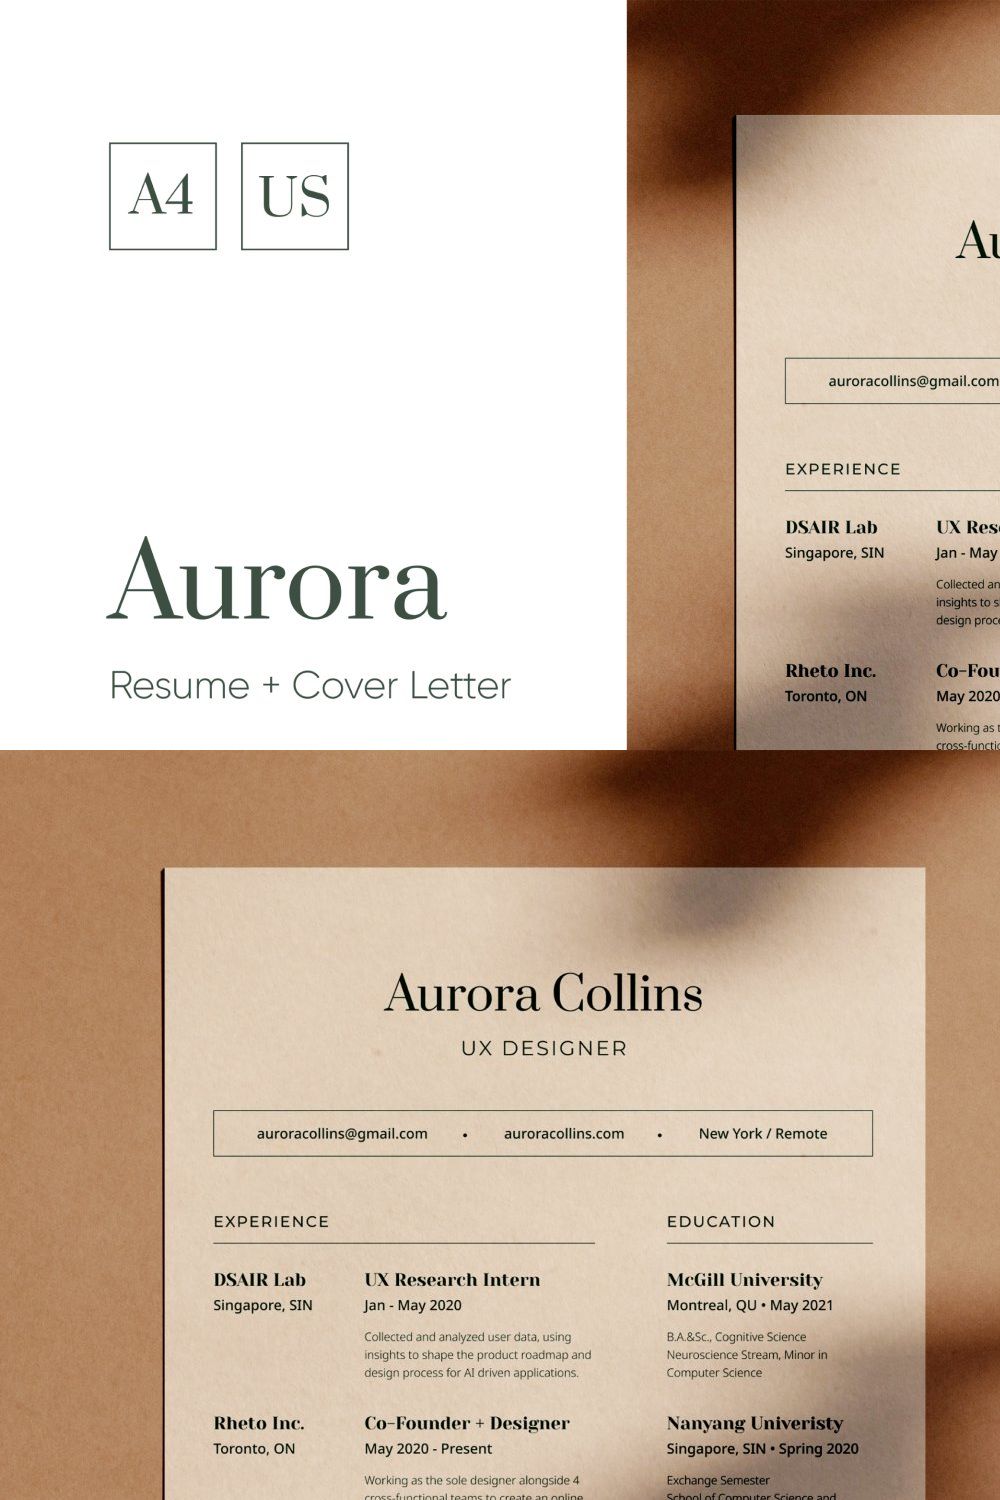 Aurora - Resume • CV • Cover Letter pinterest preview image.